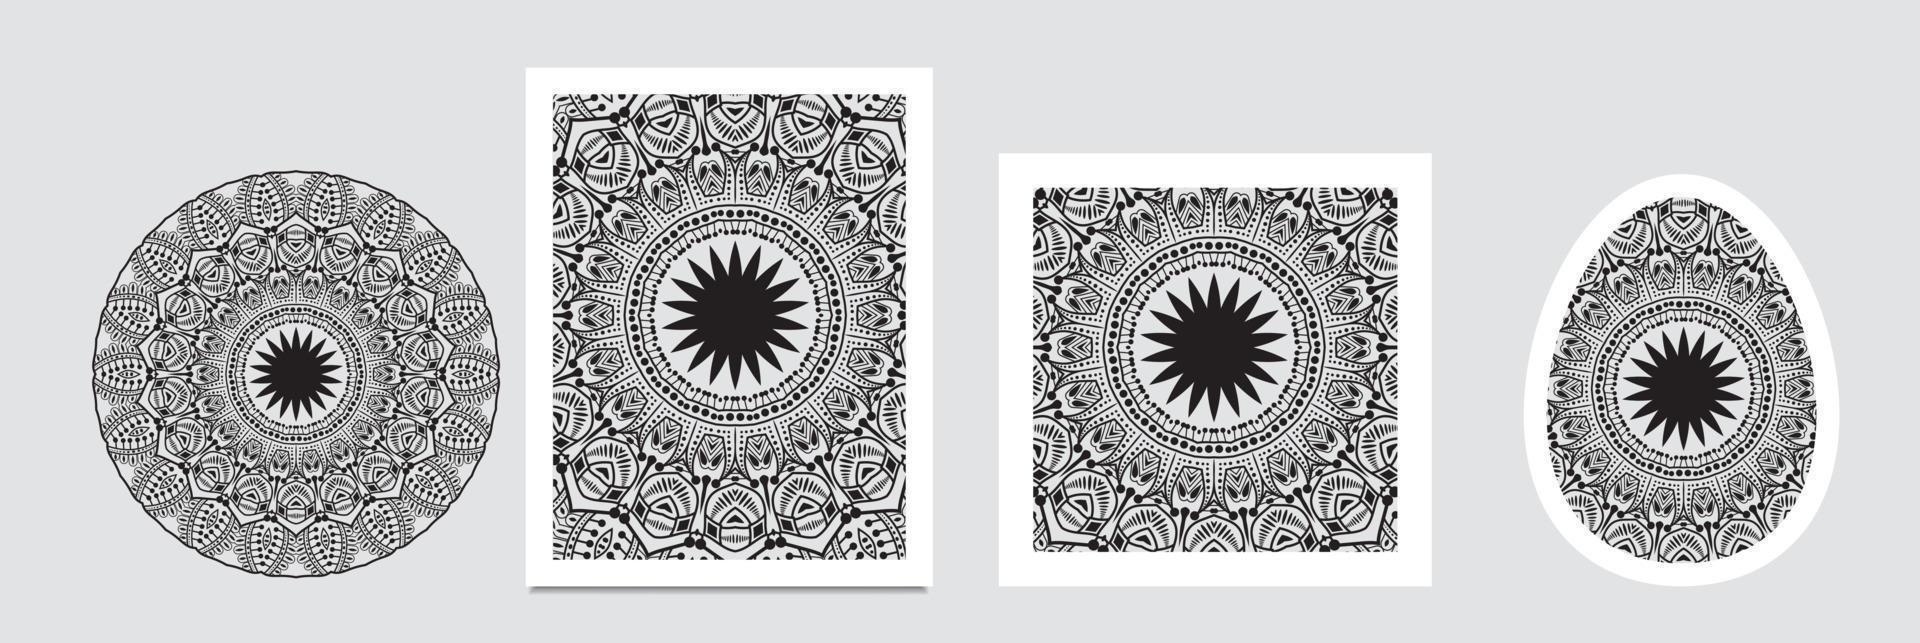 Mandala background. Vintage decorative elements. Hand drawn background. Islam, Arabic, Indian, ottoman motifs vector